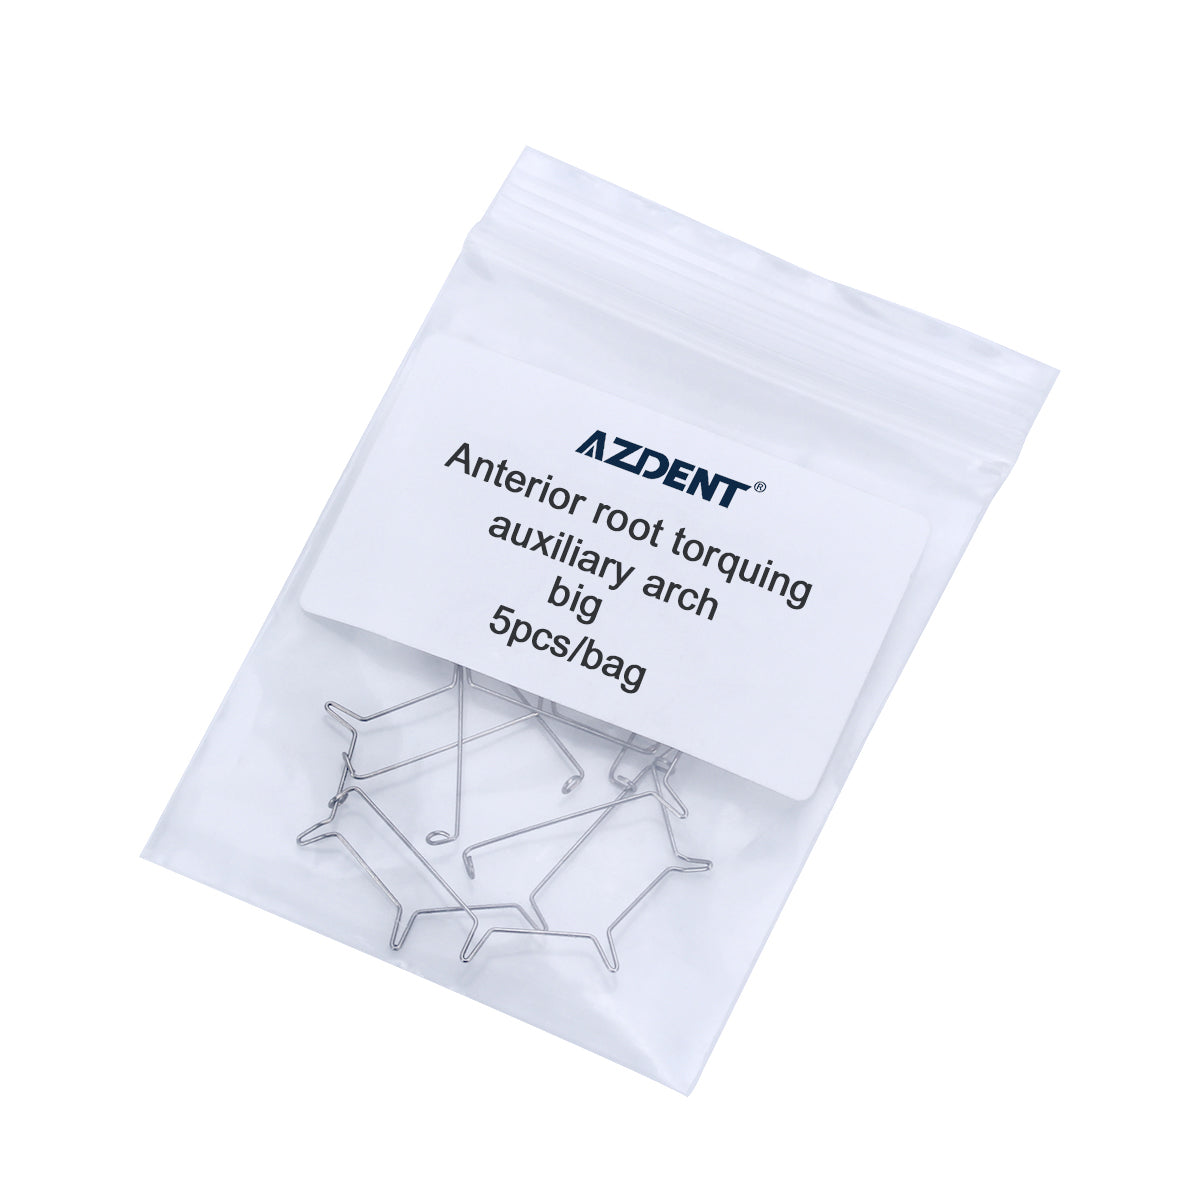 AZDENT Anterior Root Torquing Auxiliary Arch Big 5pcs/Bag - azdentall.com